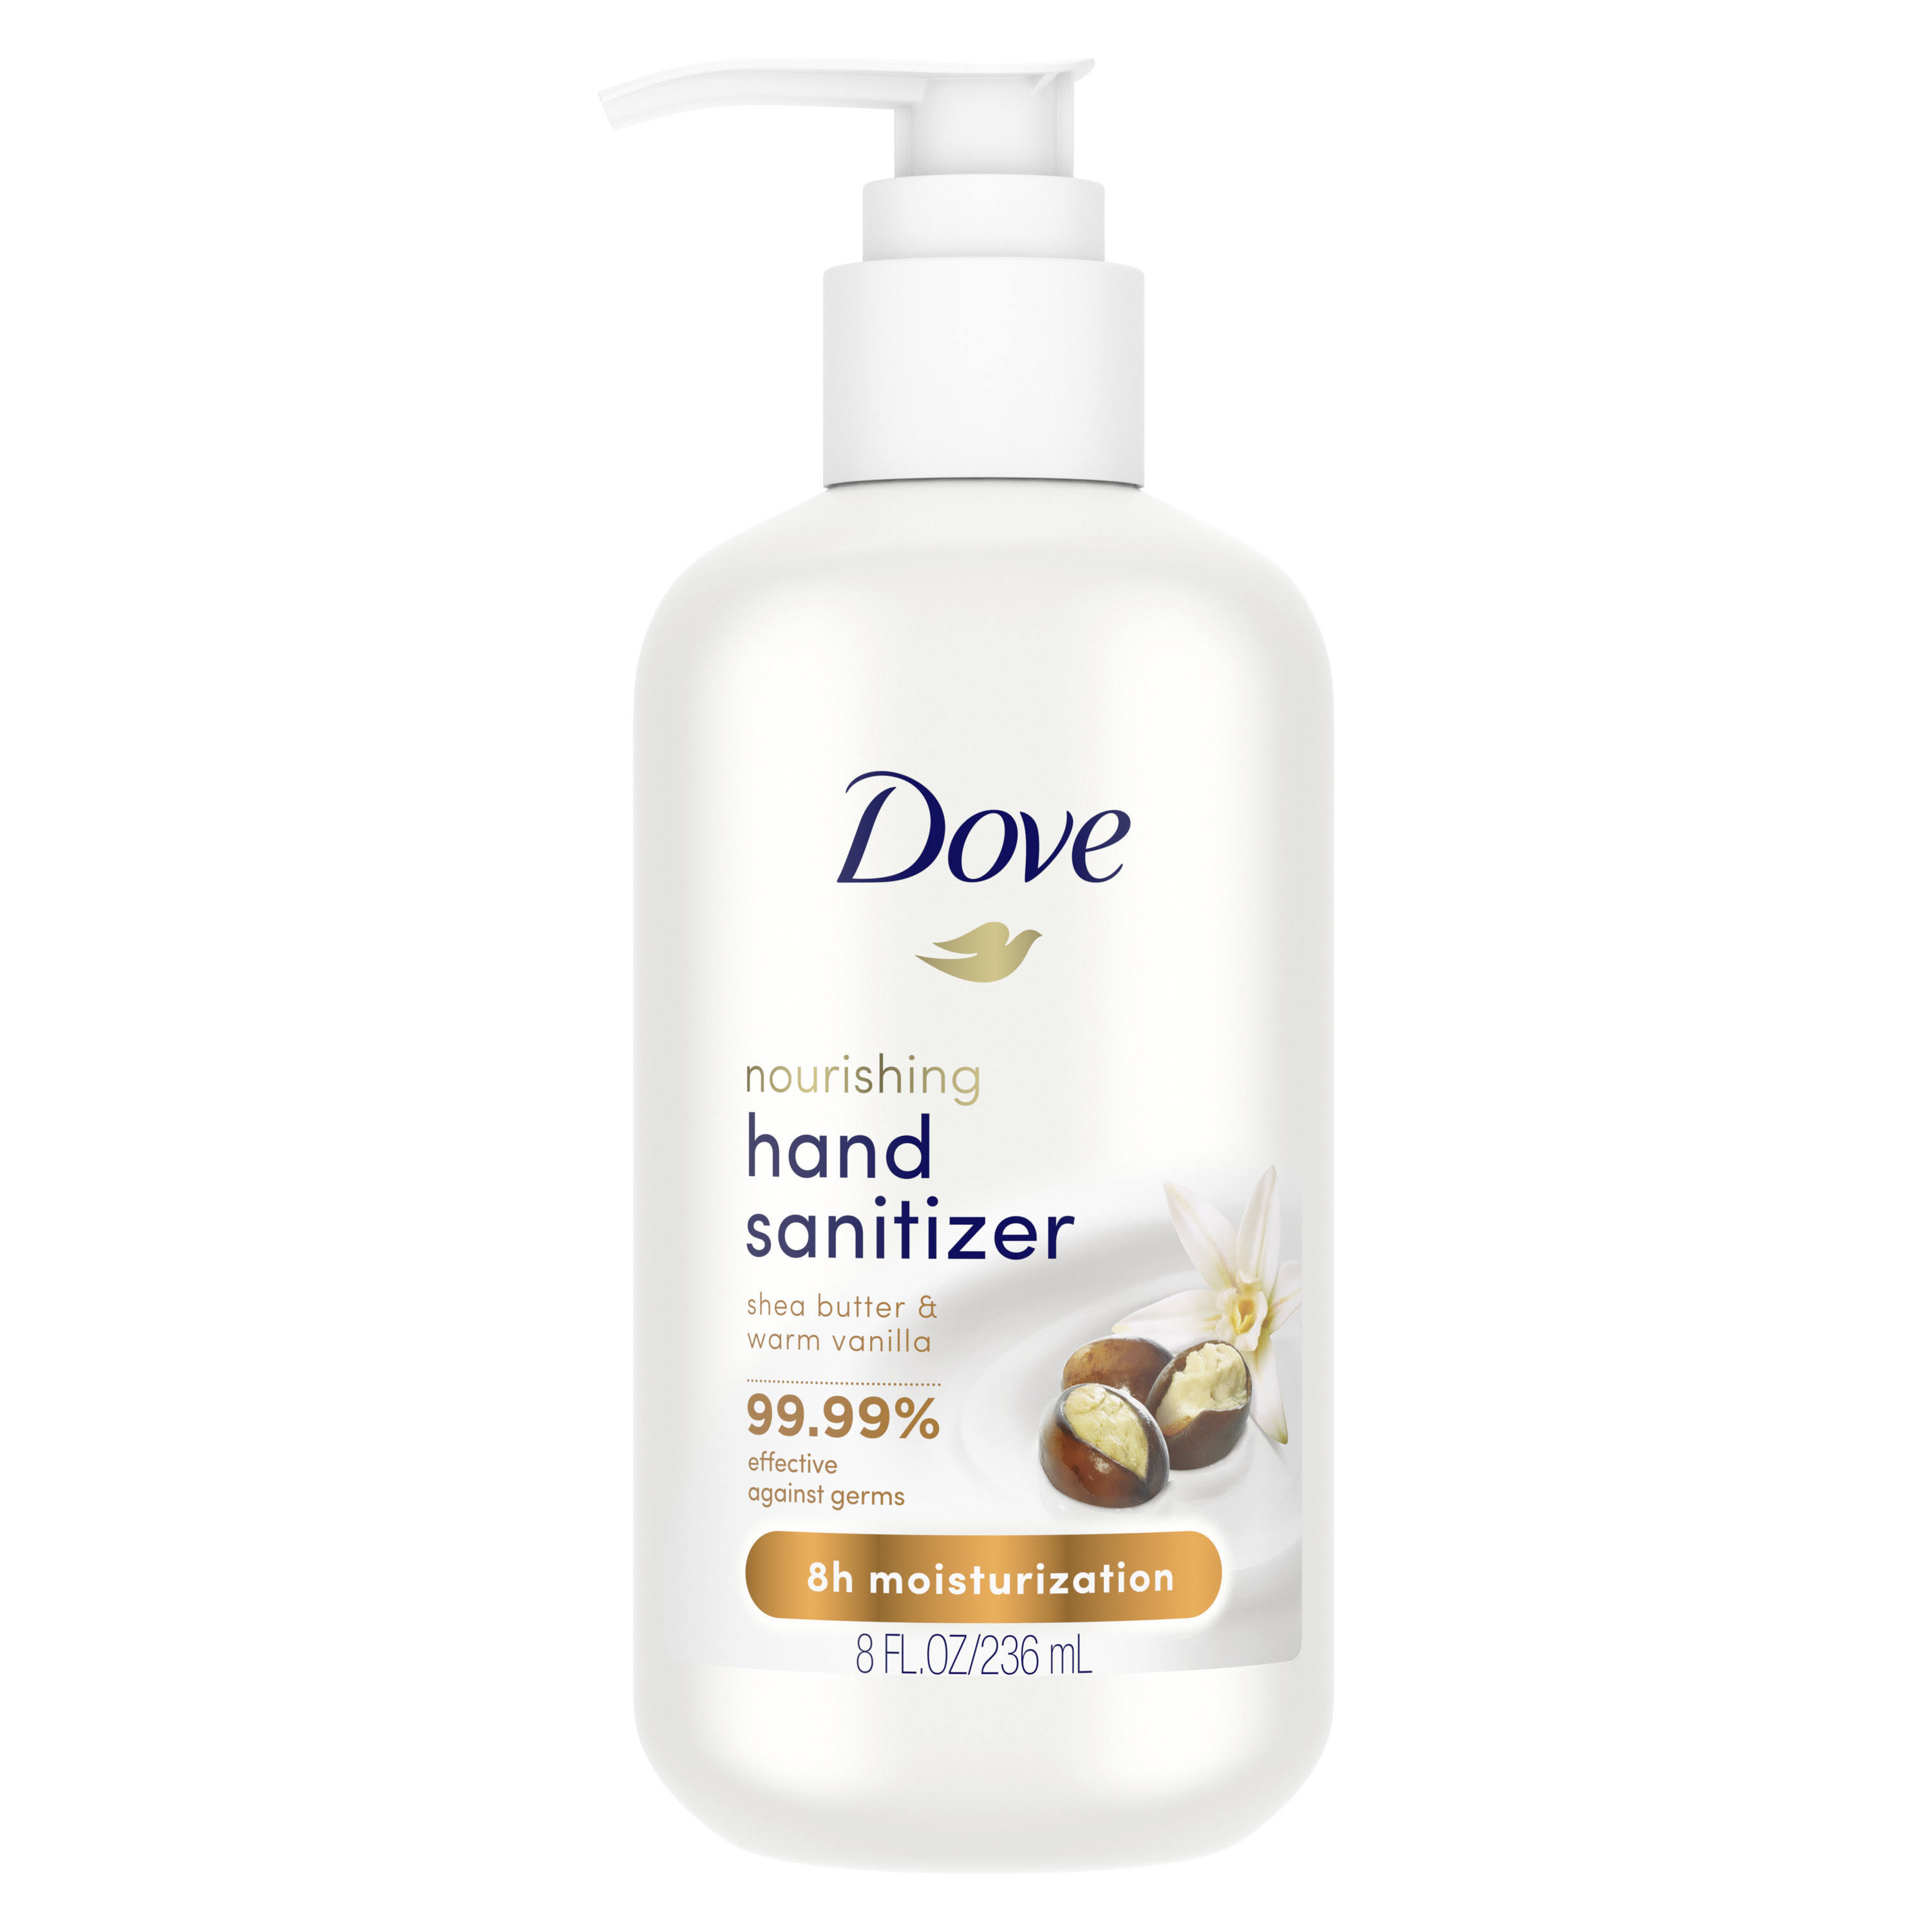 Dove Nourishing Hand Sanitizer - Shea Butter and Warm Vanilla 8 fl oz